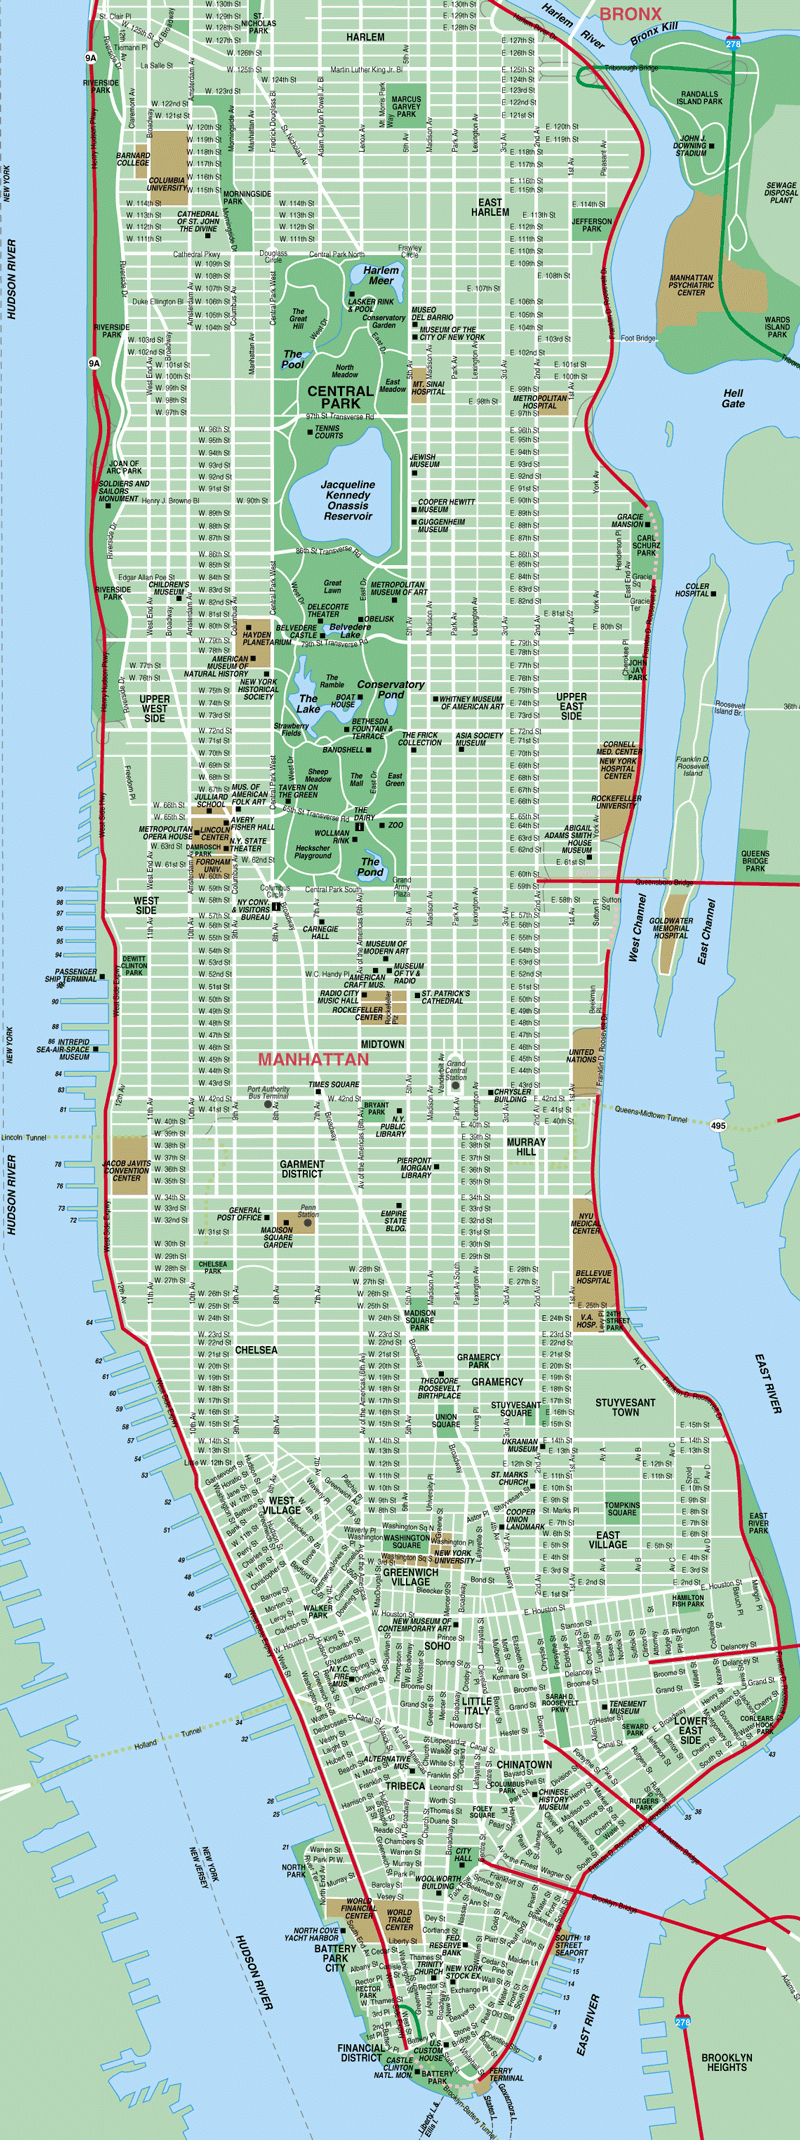 Printable Map Of Manhattan | The International House Is Just To The - Manhattan Road Map Printable